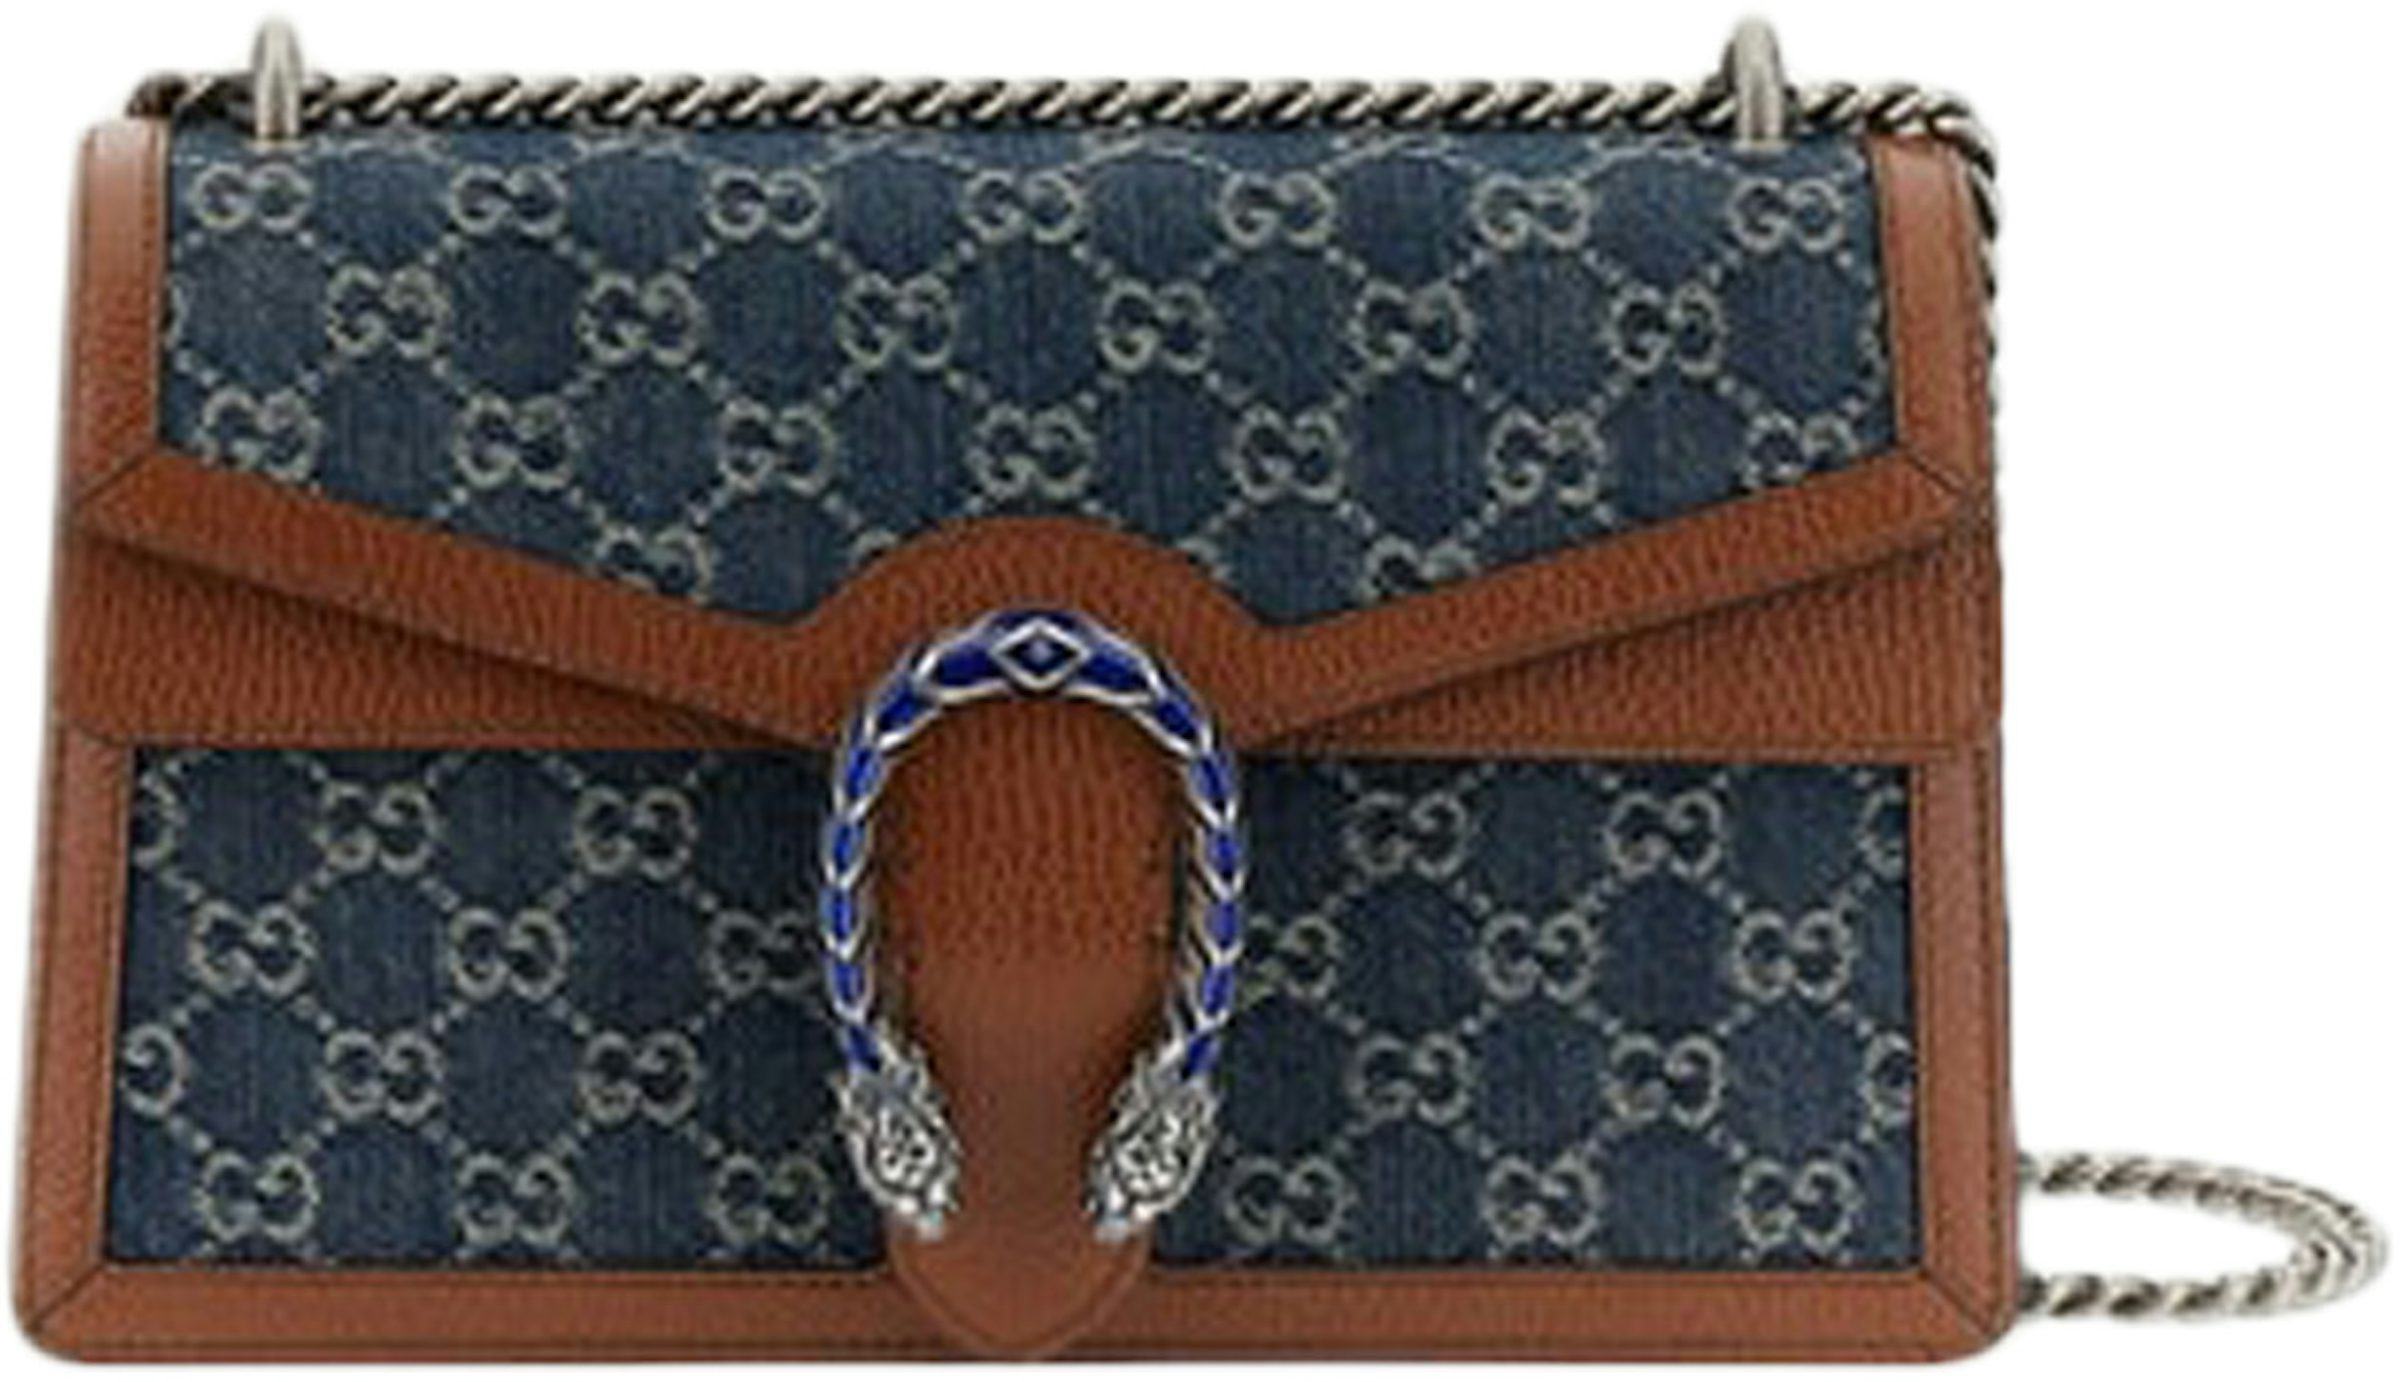 Gucci GG Supreme Monogram Elaphe Elephant Embroidered Small Dionysus Shoulder Bag